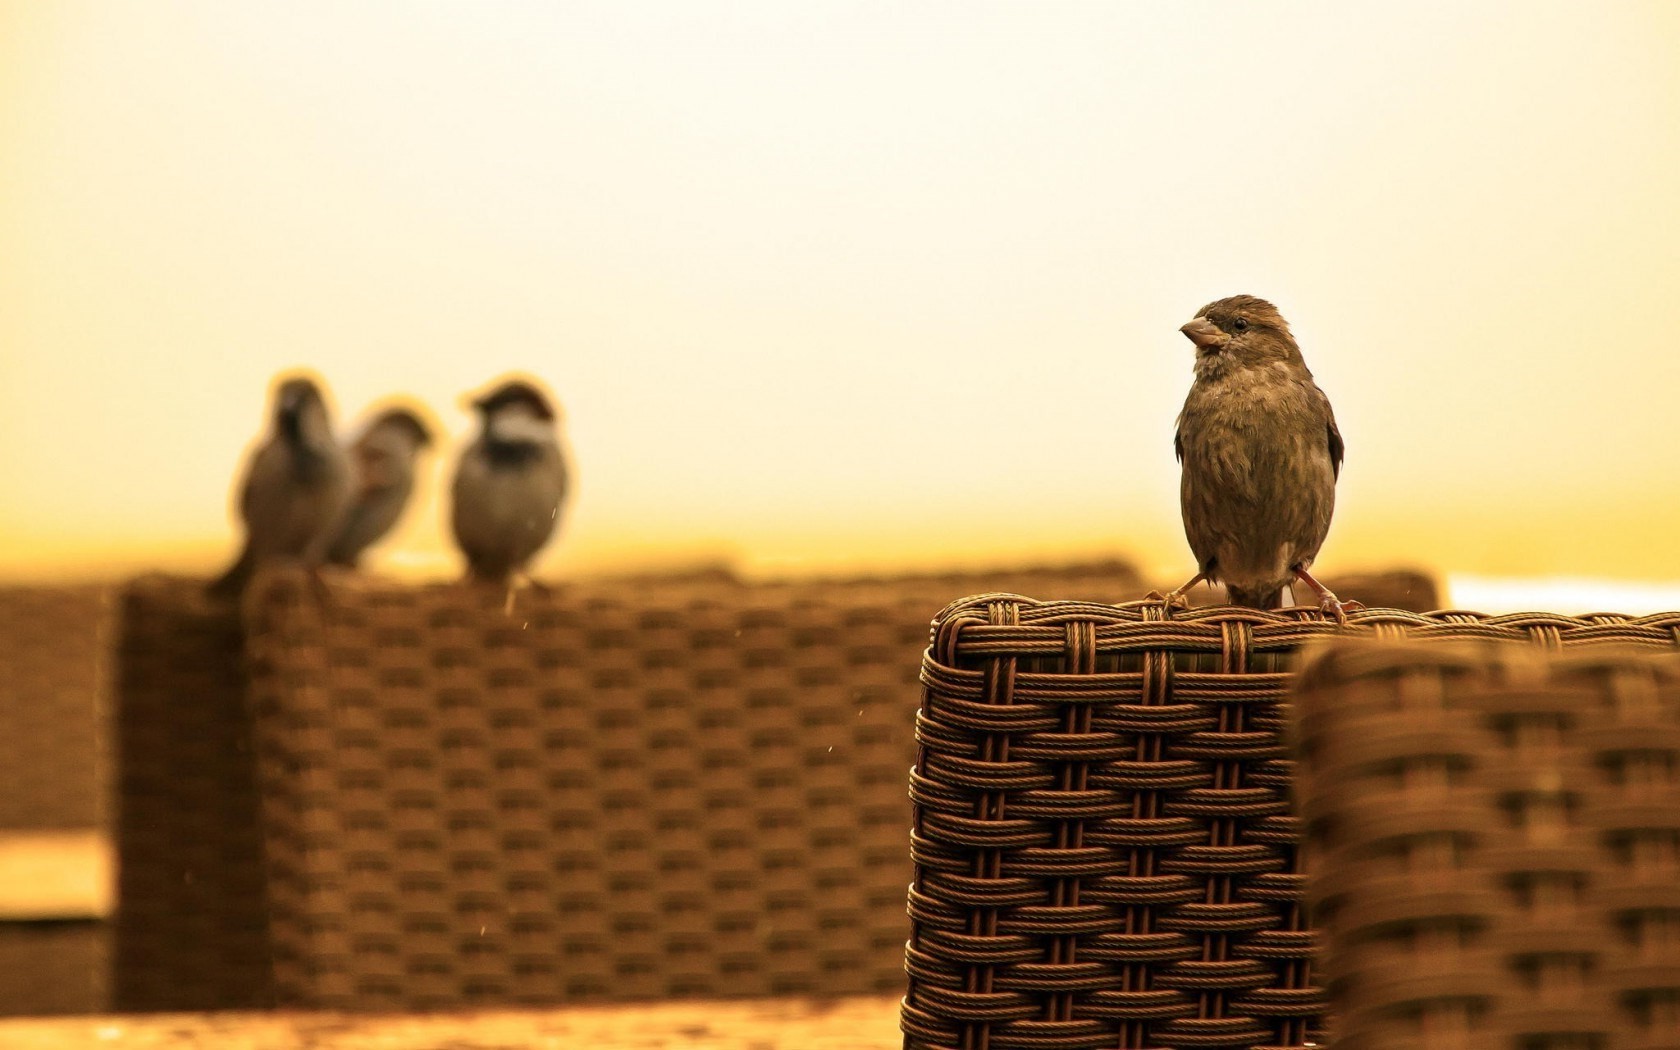 sitting nature sparrow baskets birds photography sunlight Wallpaper